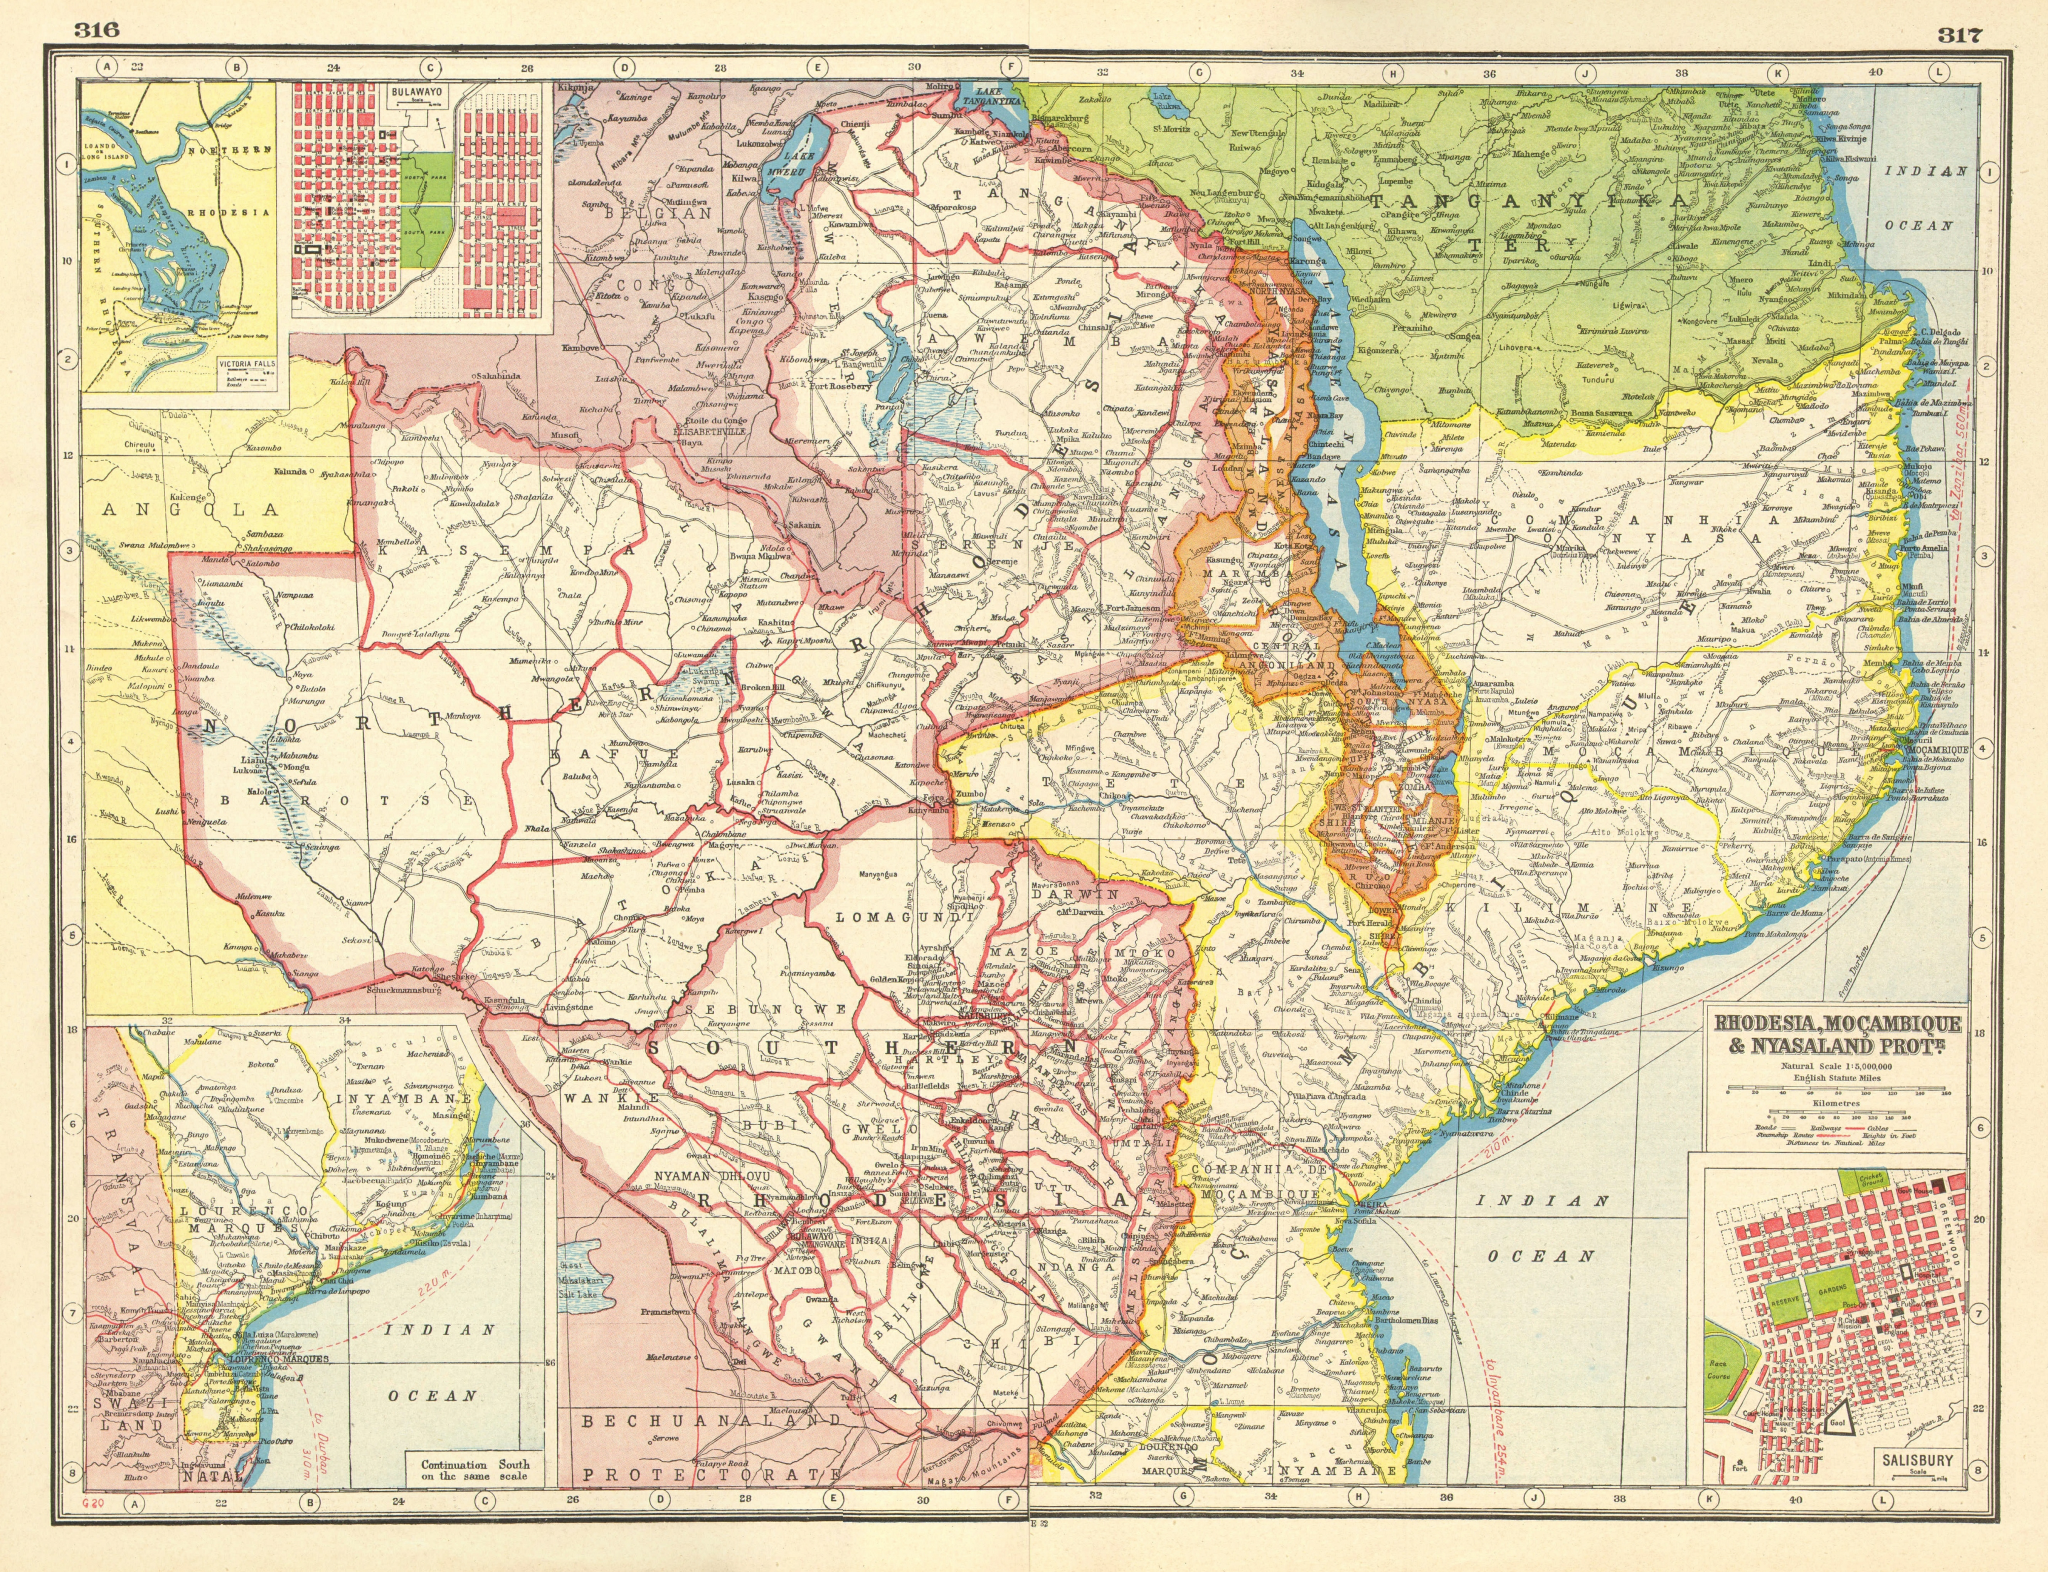 EAST AFRICA. Rhodesia Mozambique Nyasaland. Bulawayo Salisbury/Harare 1920 map